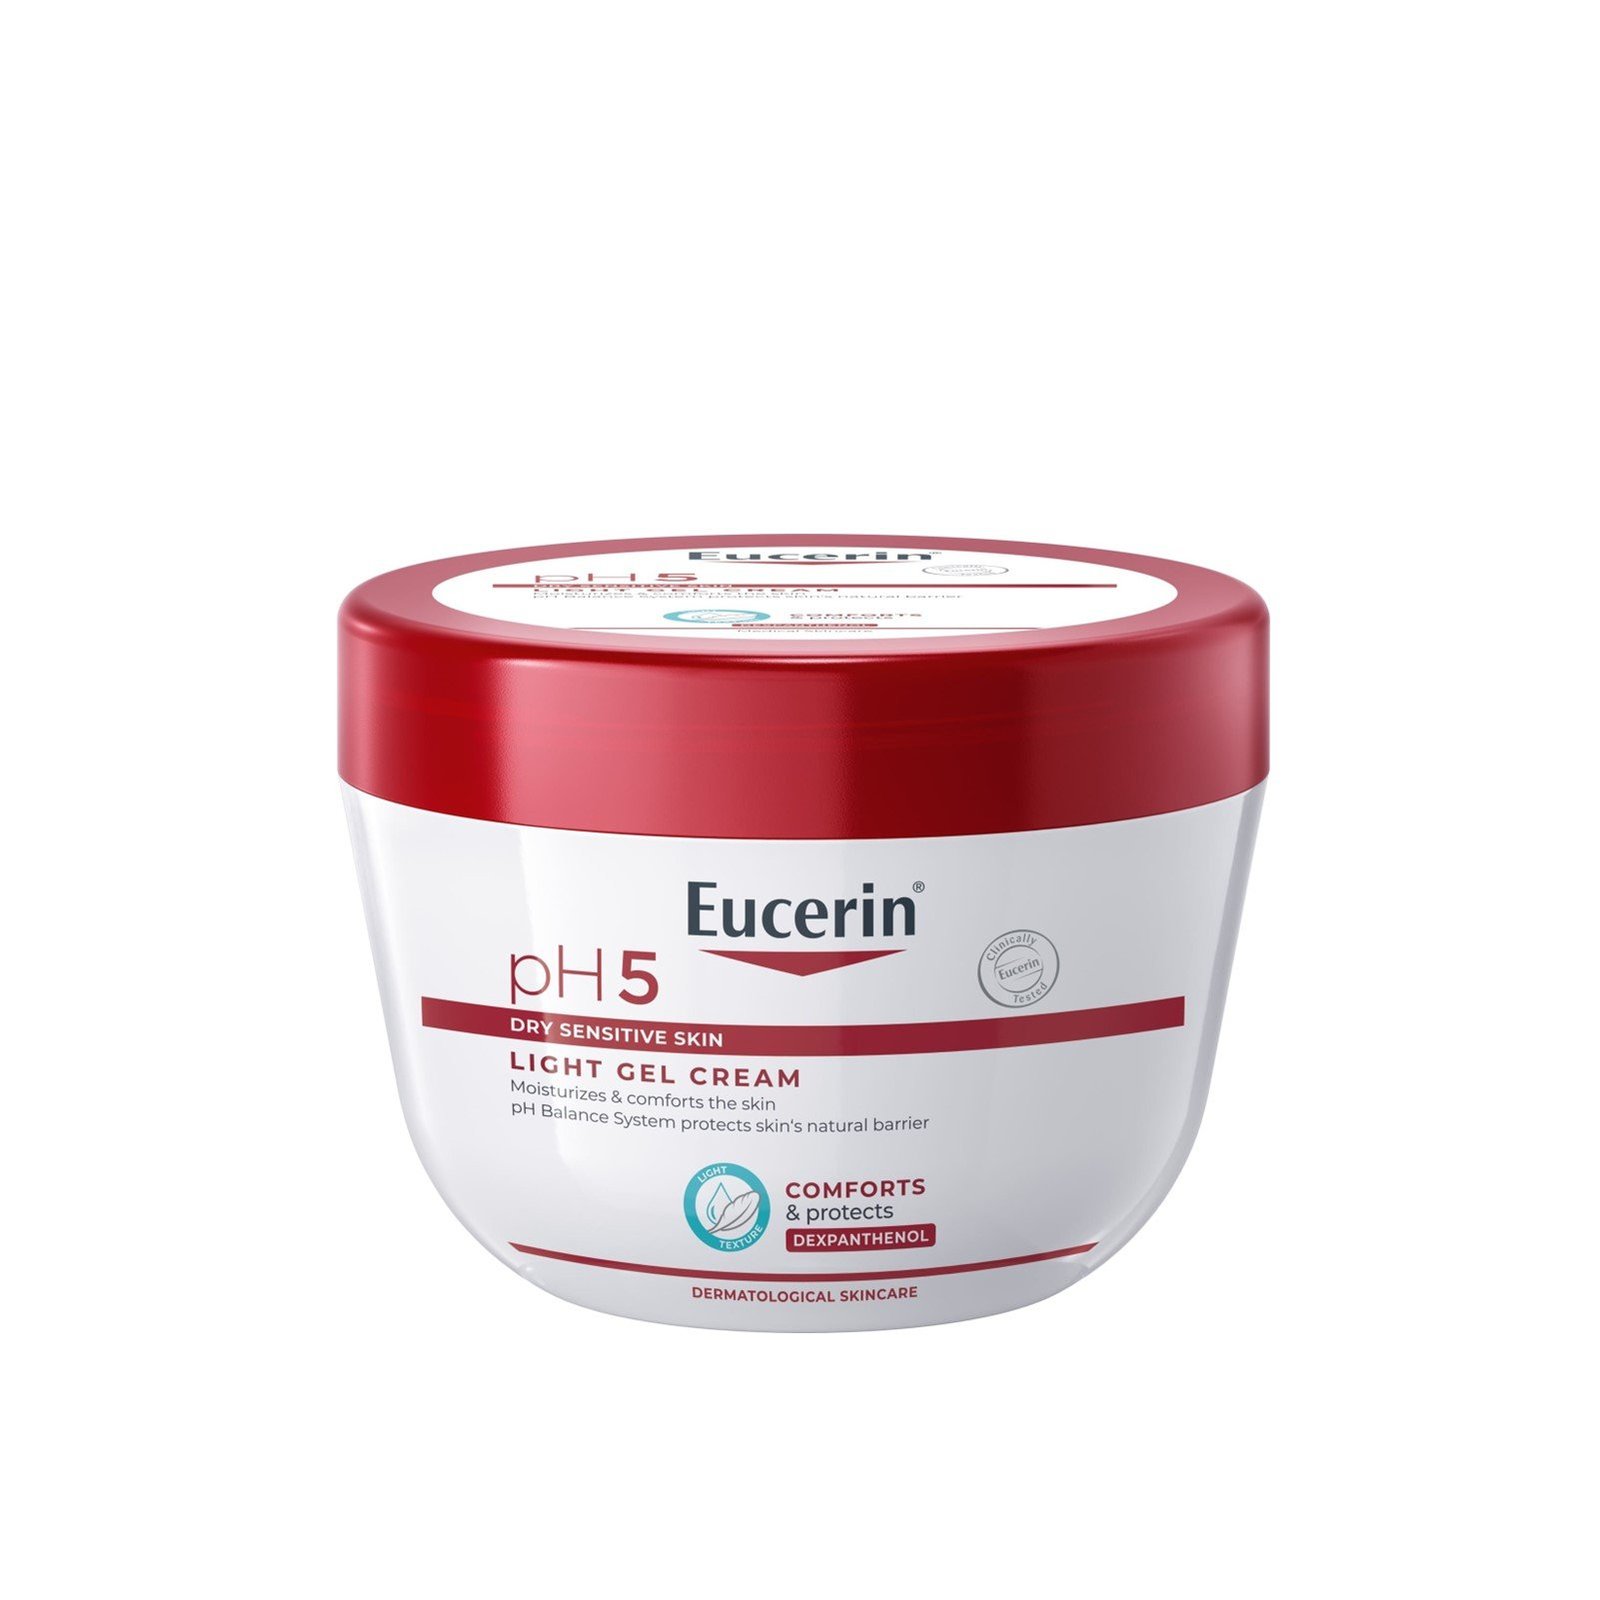 Eucerin pH5 Light Gel Cream 350ml (11.83 fl oz)